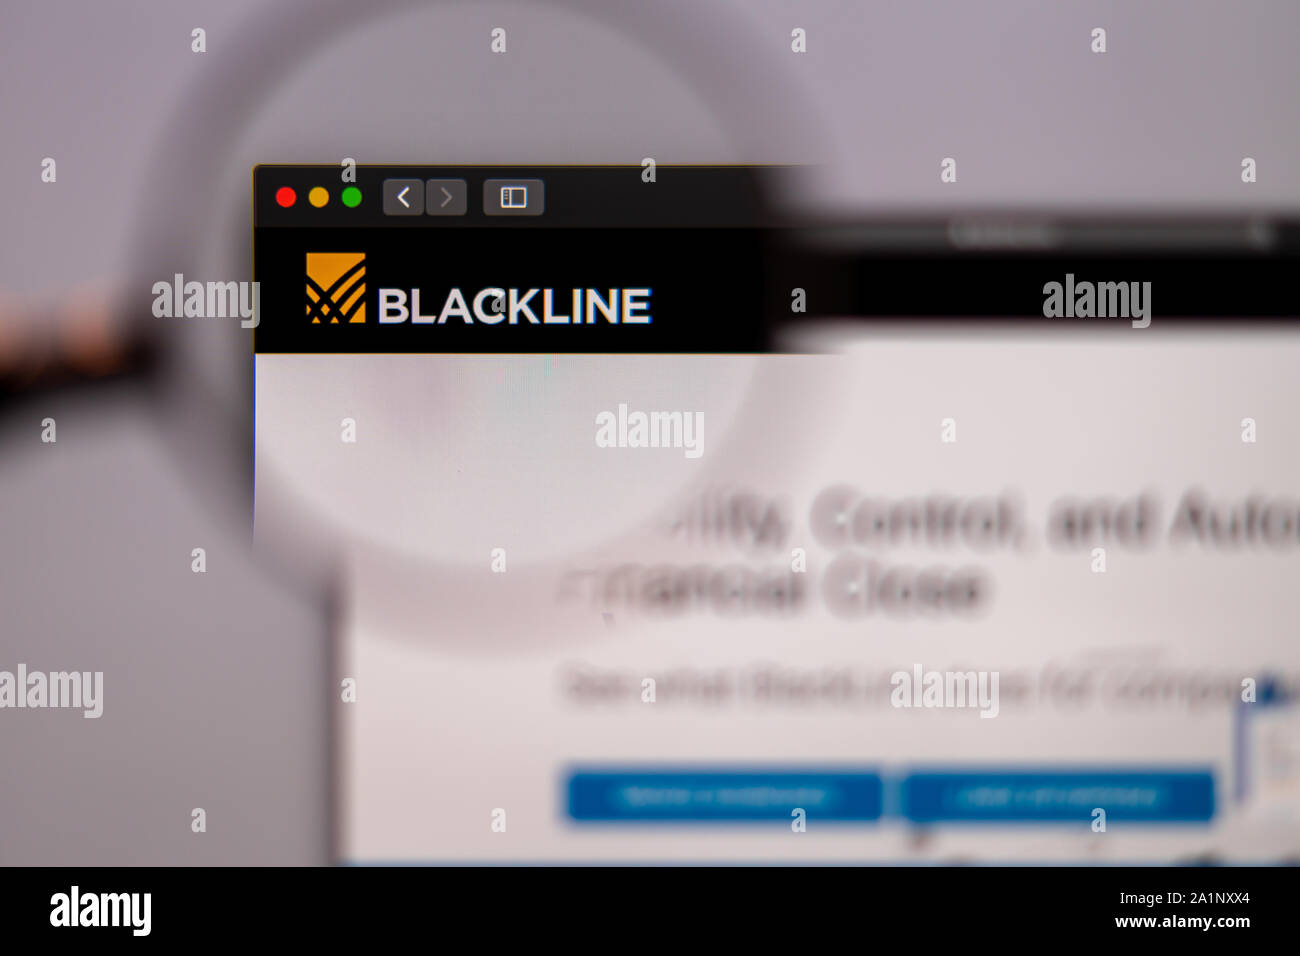 Tallinn/Estonia - September 27, 2019: Blackline company website homepage. Close up of Blackline logo. Can be used as illustrative for news media or  b Stock Photo